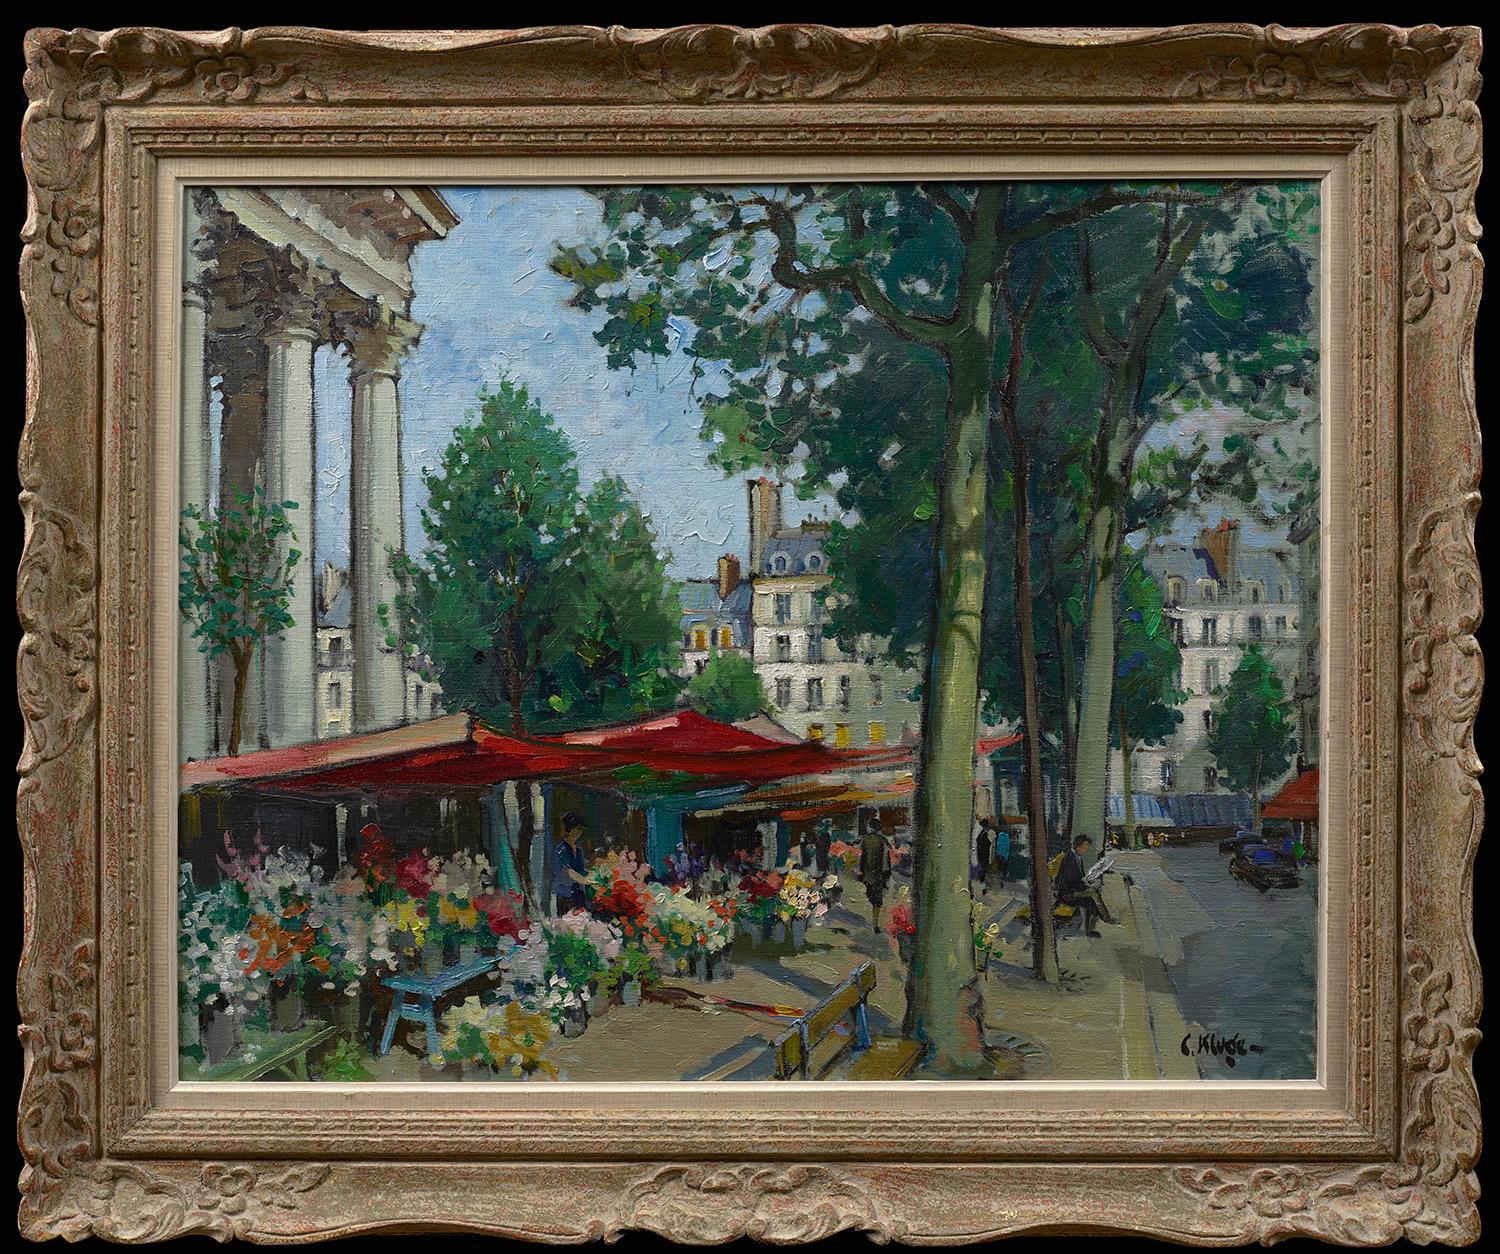 Marche aux fleurs, Madeleine - Painting by Constantin Kluge